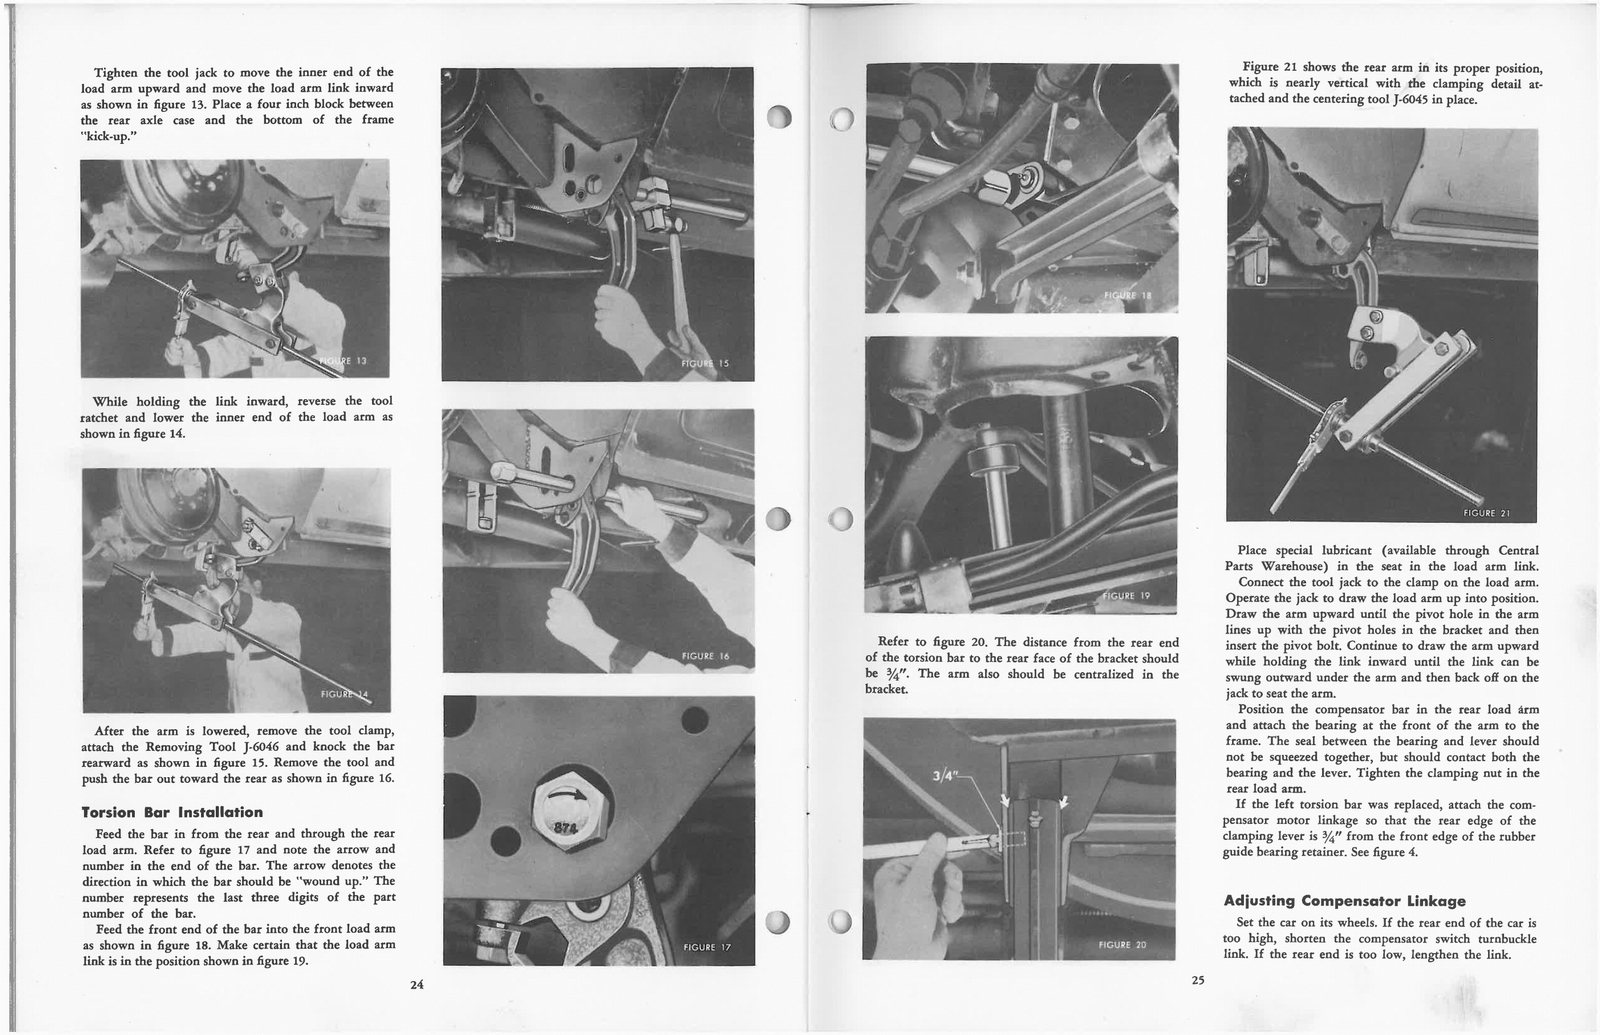 n_1955 Packard Sevicemens Training Book-24-25.jpg